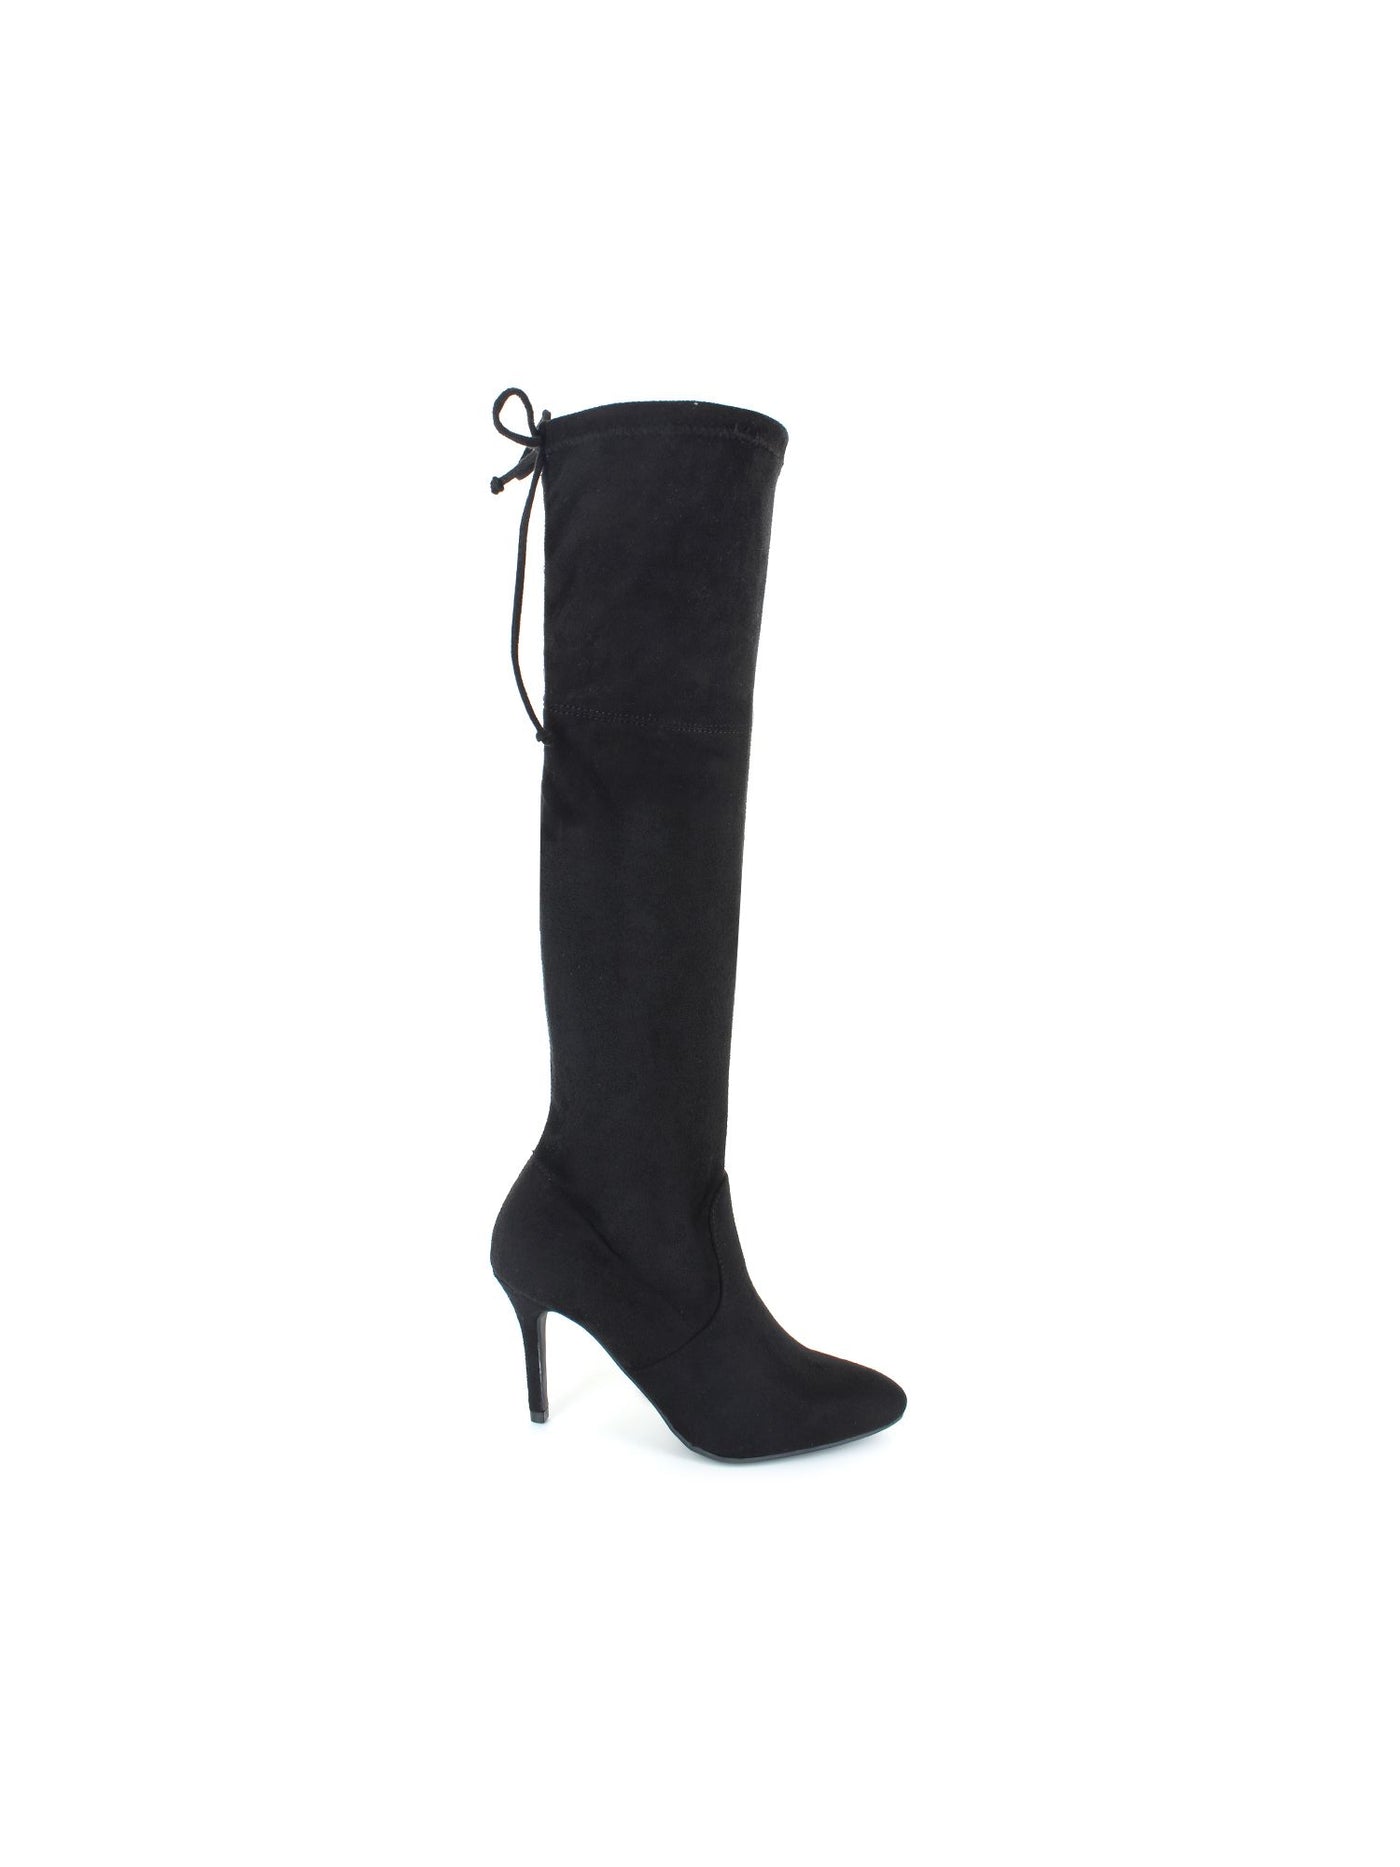 ZIGI SOHO Womens Black Tie Back Padded Silla Pointed Toe Stiletto Zip-Up Dress Boots 7.5